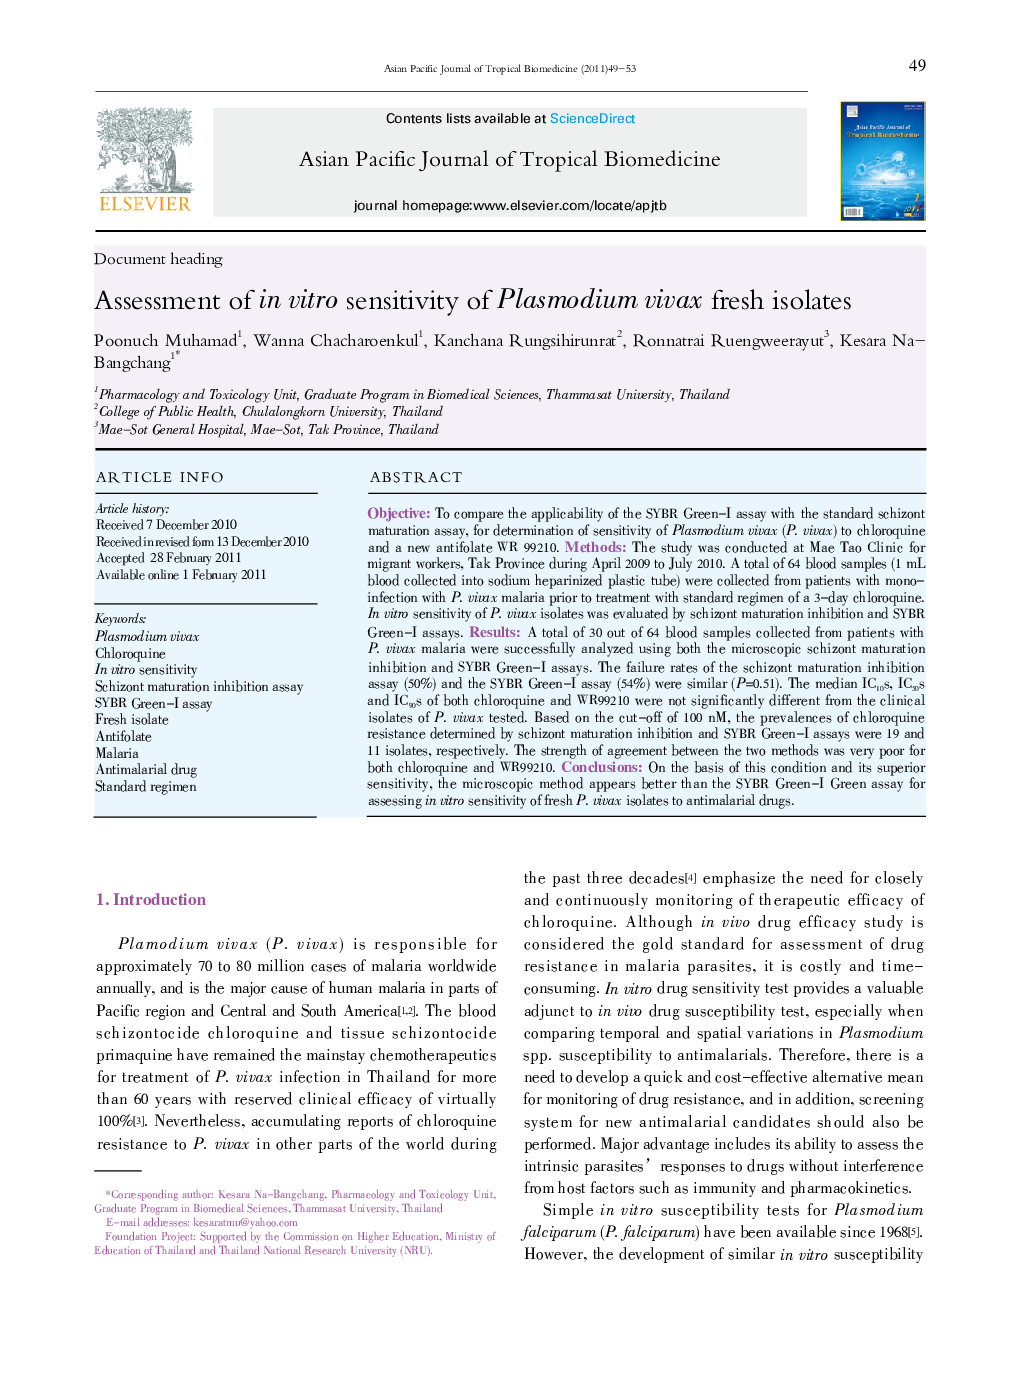 Assessment of in vitro sensitivity of Plasmodium vivax fresh isolates